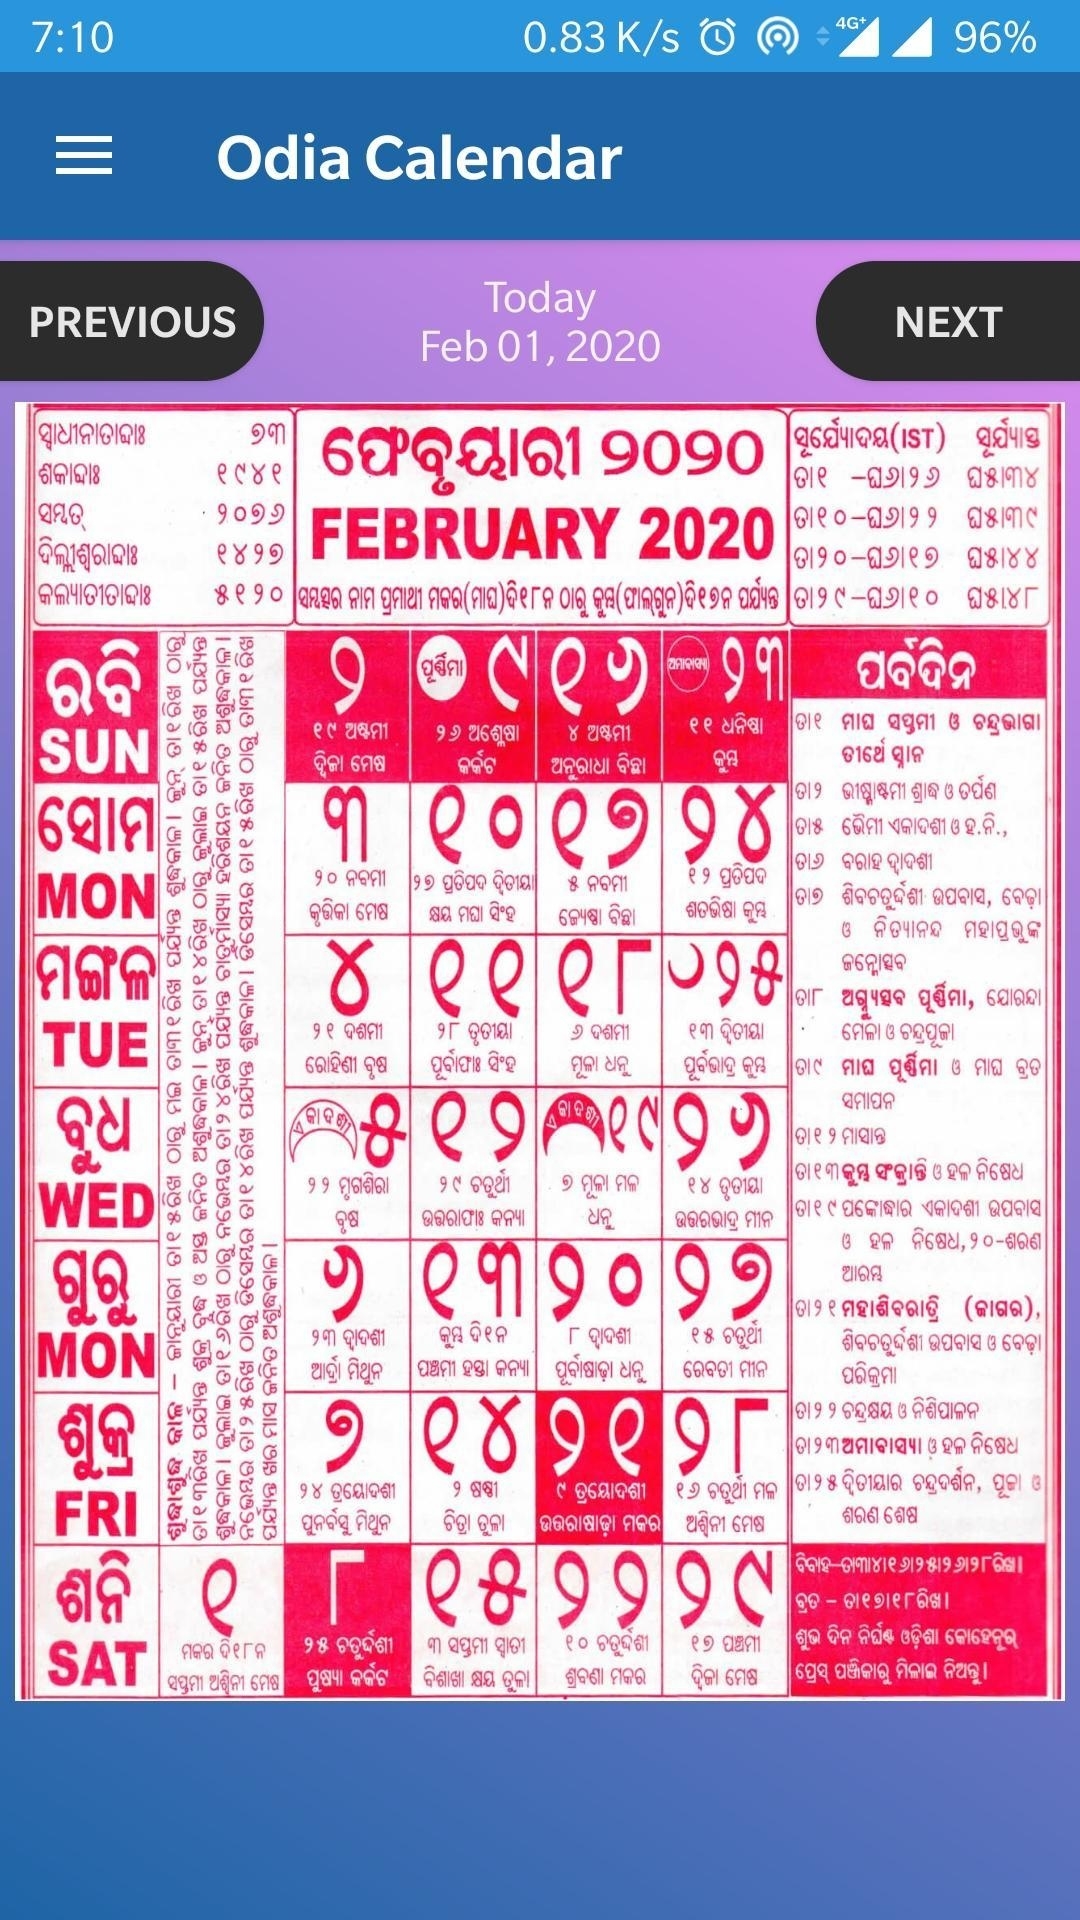 20+ Odia Calendar 2021 August - Free Download Printable Calendar Templates ️ Kohinoor Calendar December 2021